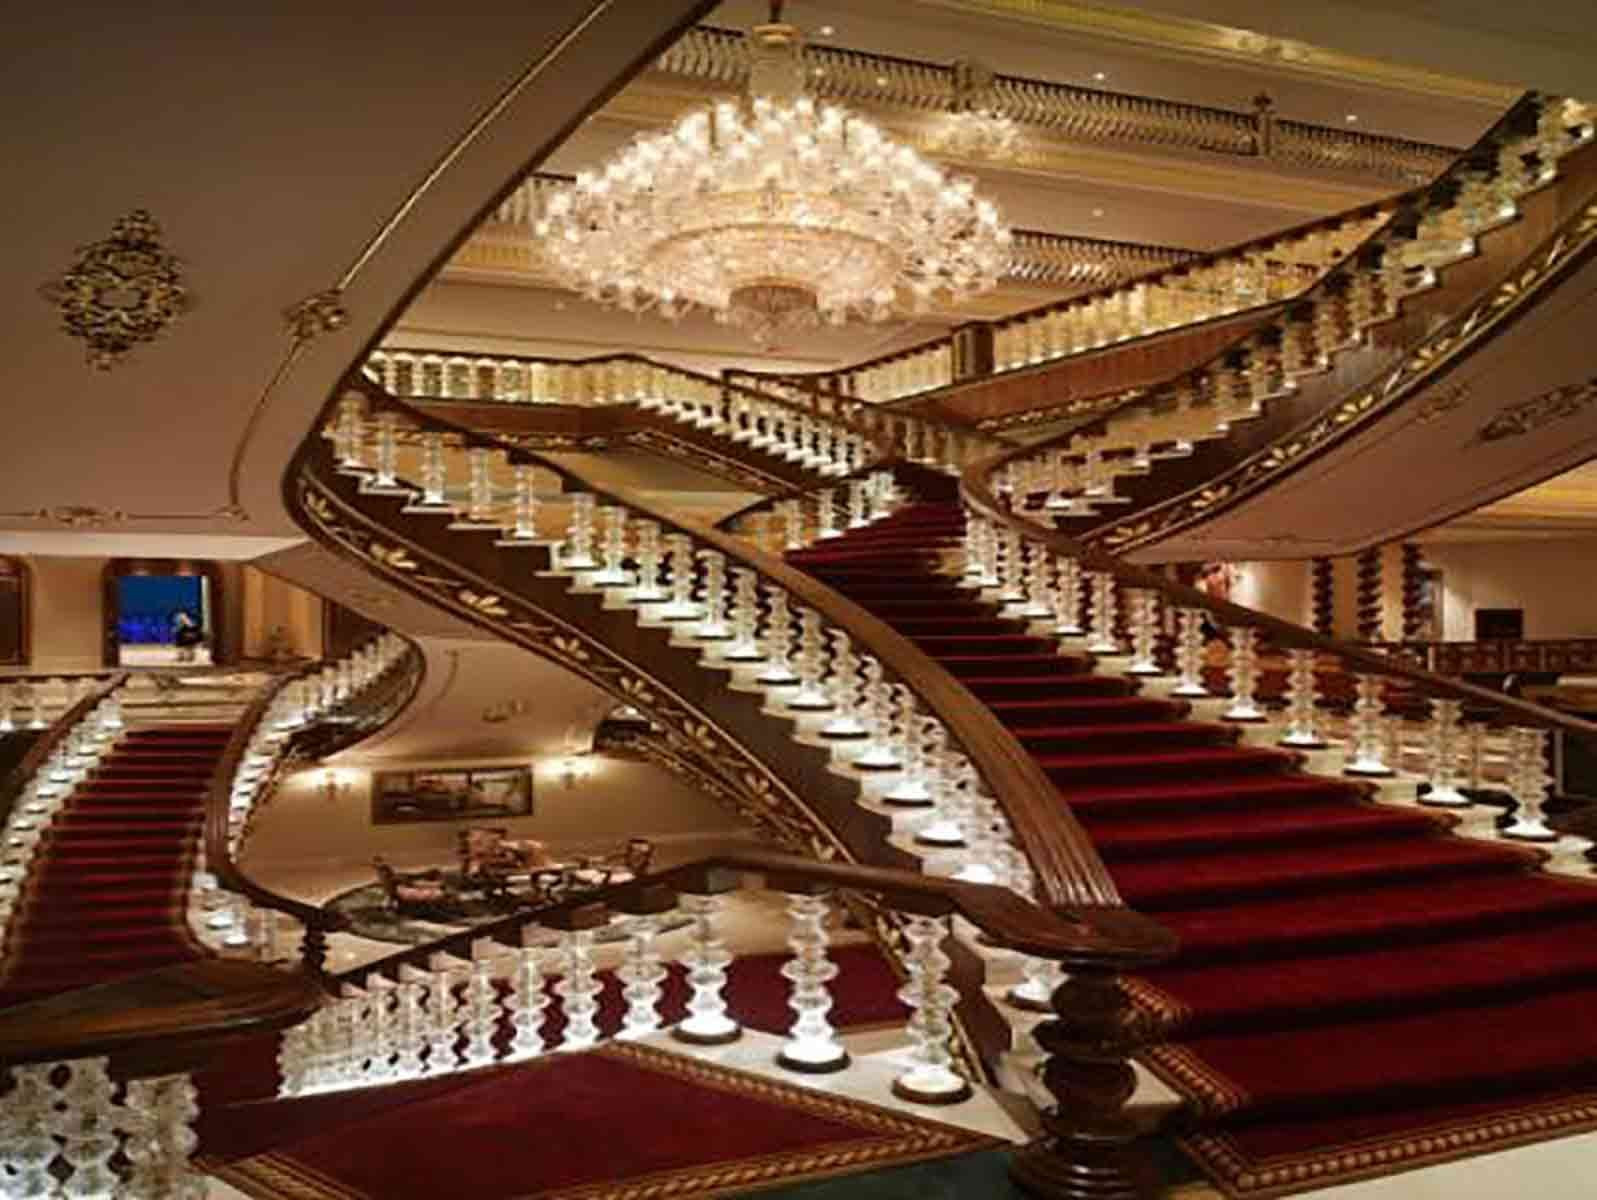 رزرو هتل قصر طلایی مشهد (کیدز سوئیت)